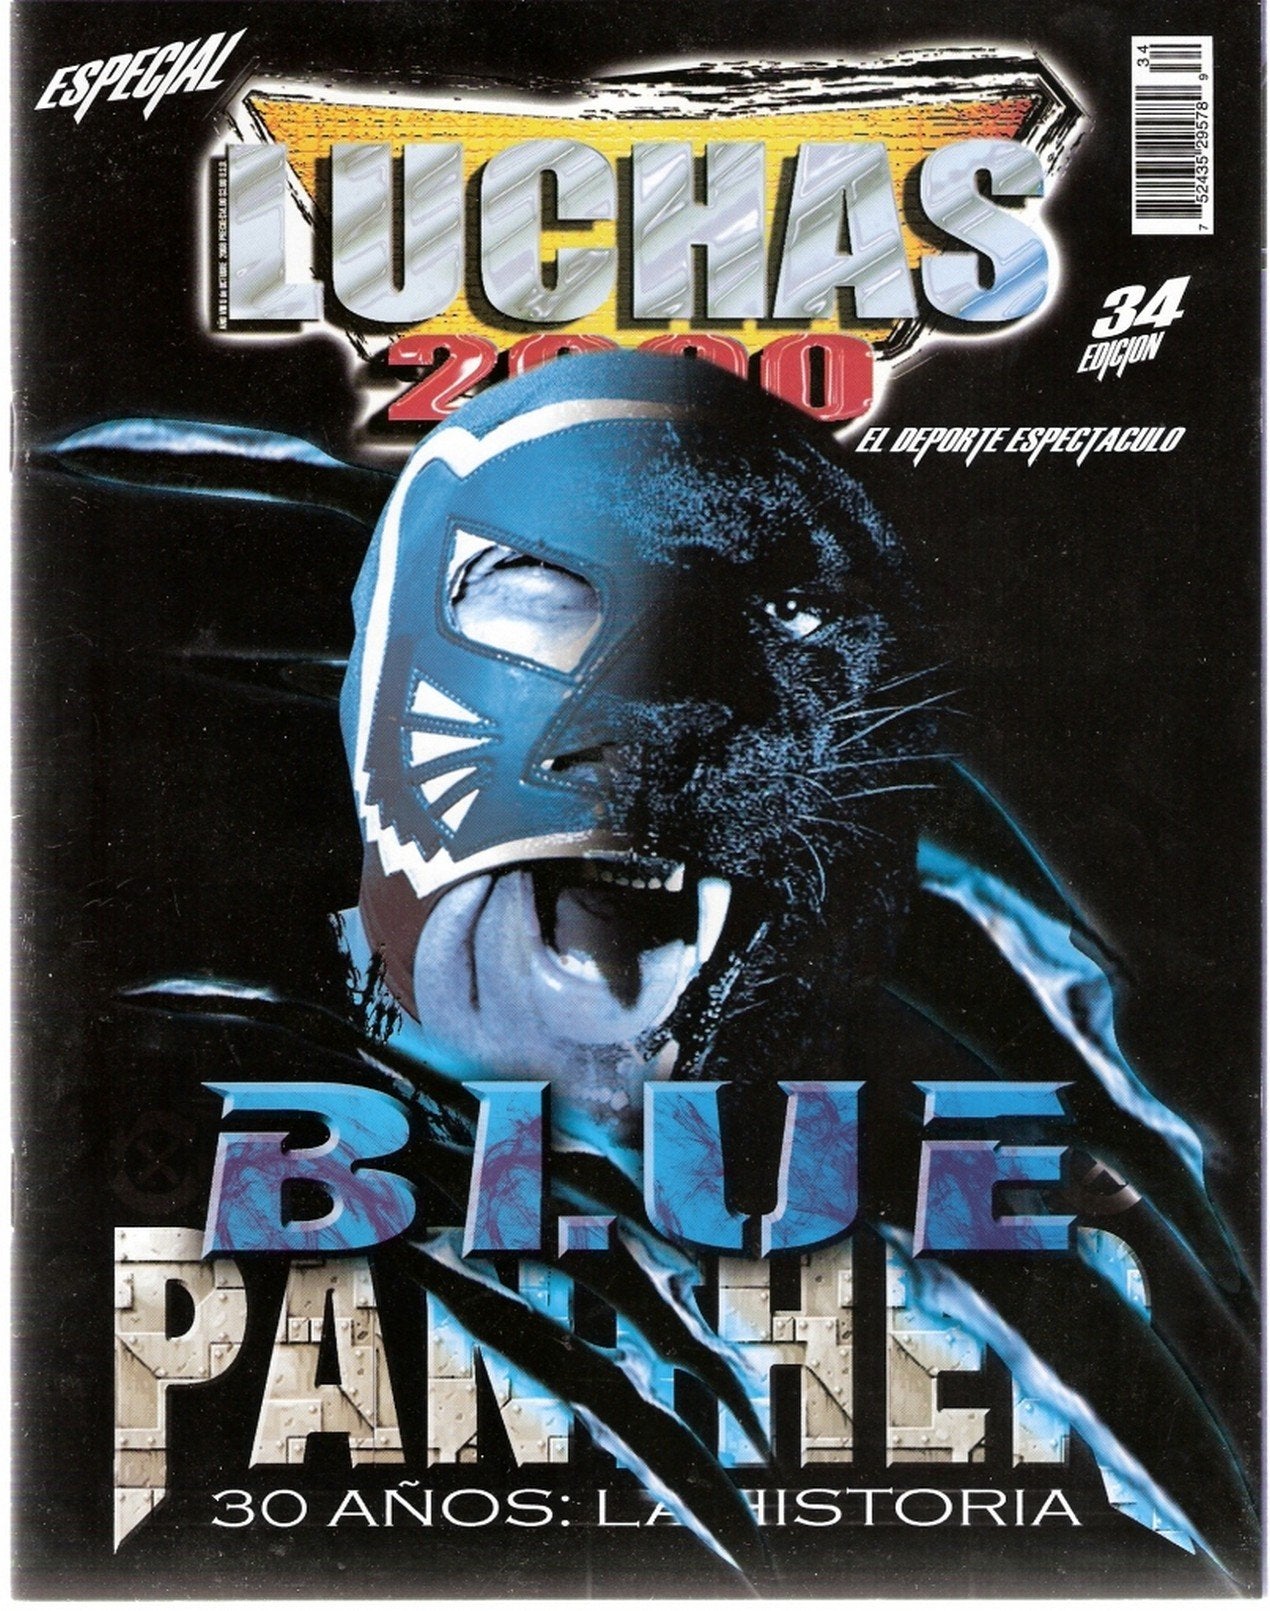 Luchas 2000 Volume 34